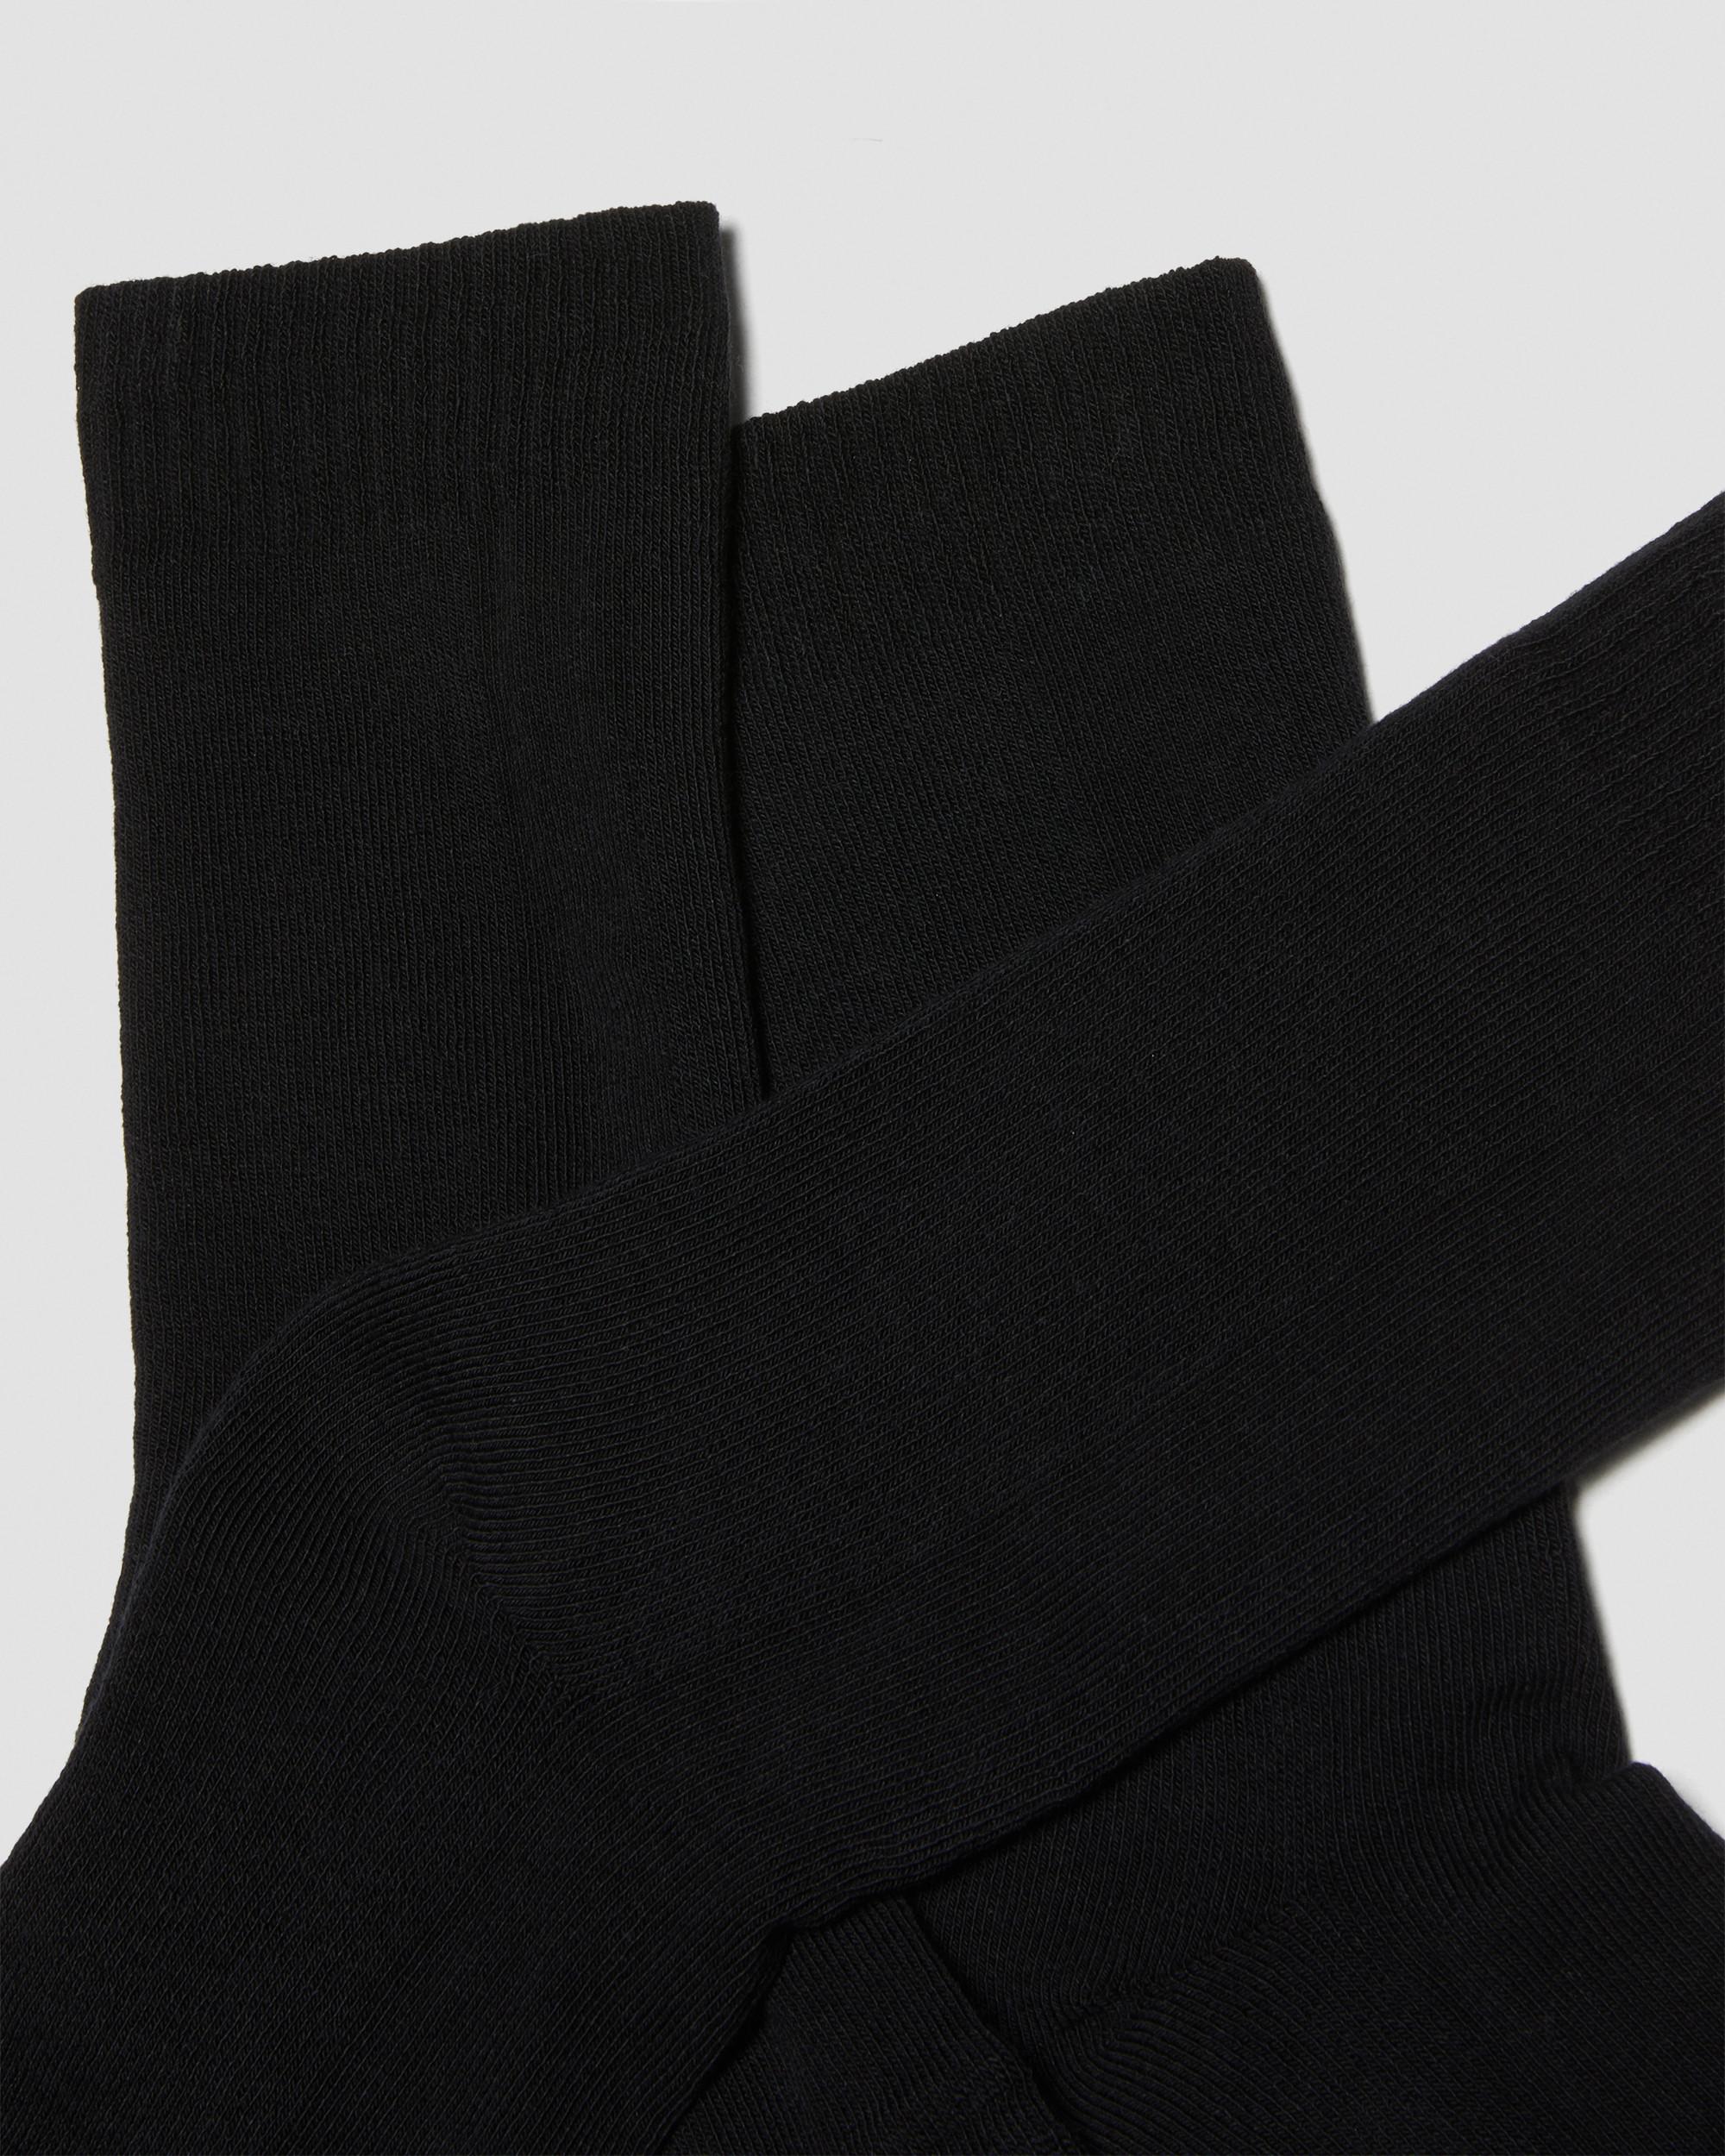 Double Doc Organic Cotton Blend 3-Pack Socks in Black | Dr. Martens